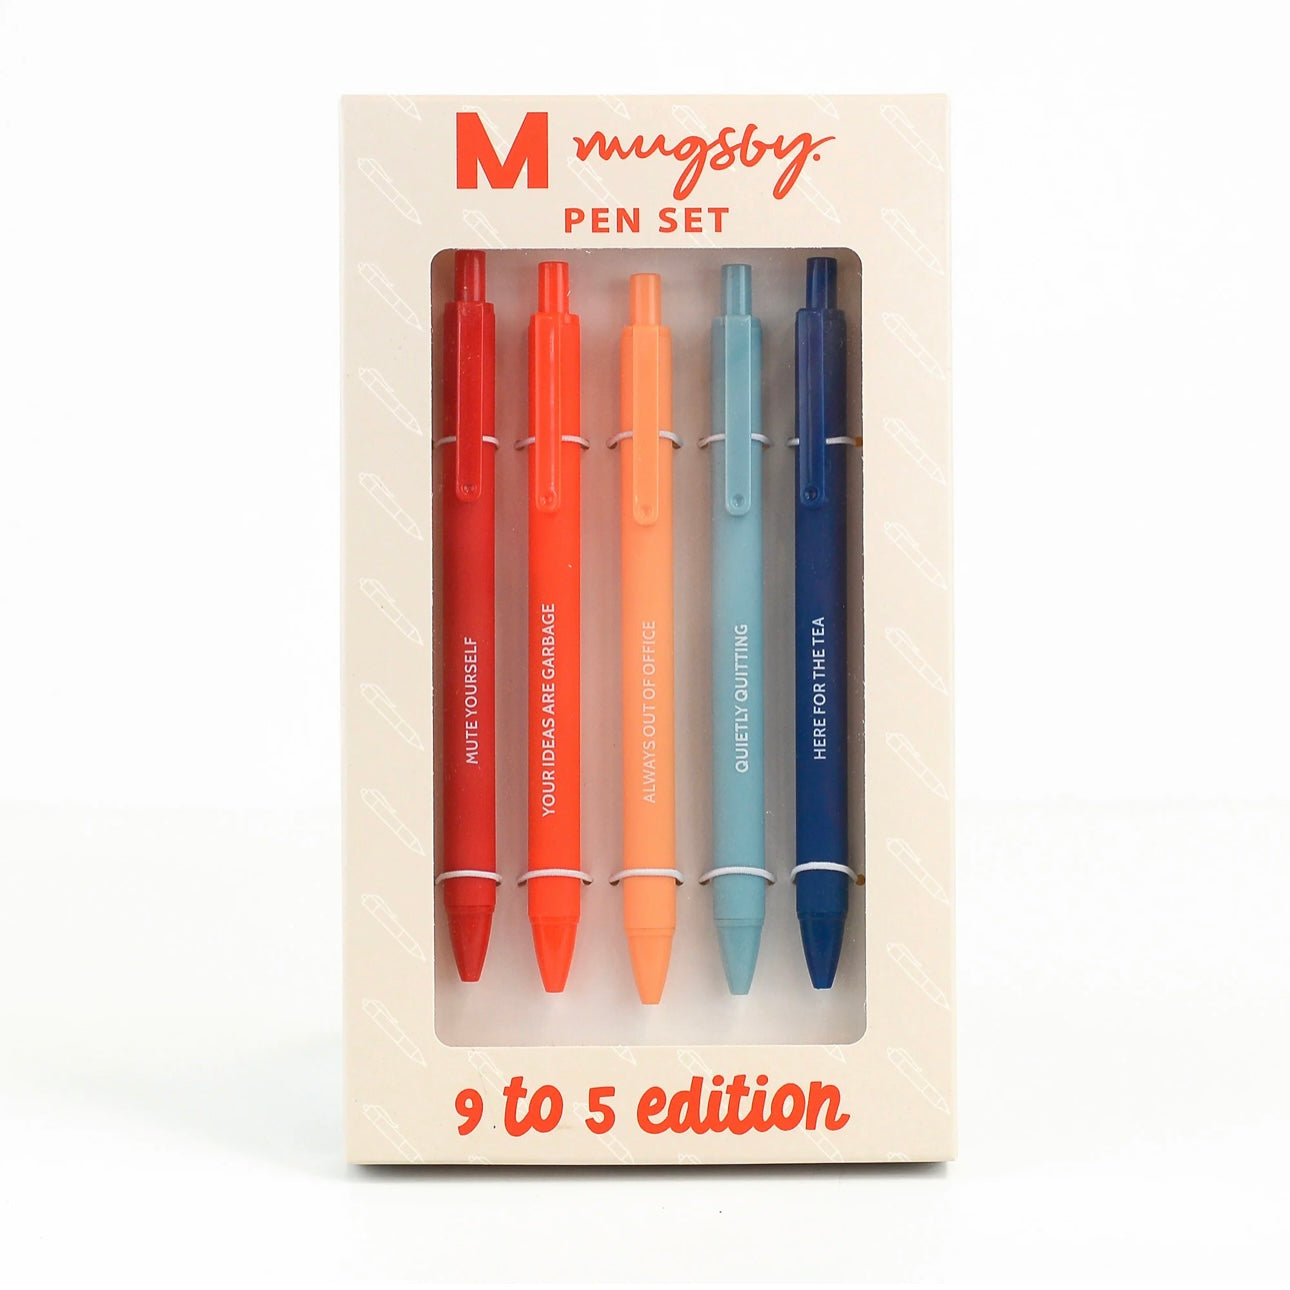 Kate Spade Fine Tip Pen Set, Colorblock by Lifeguard Press Inc.